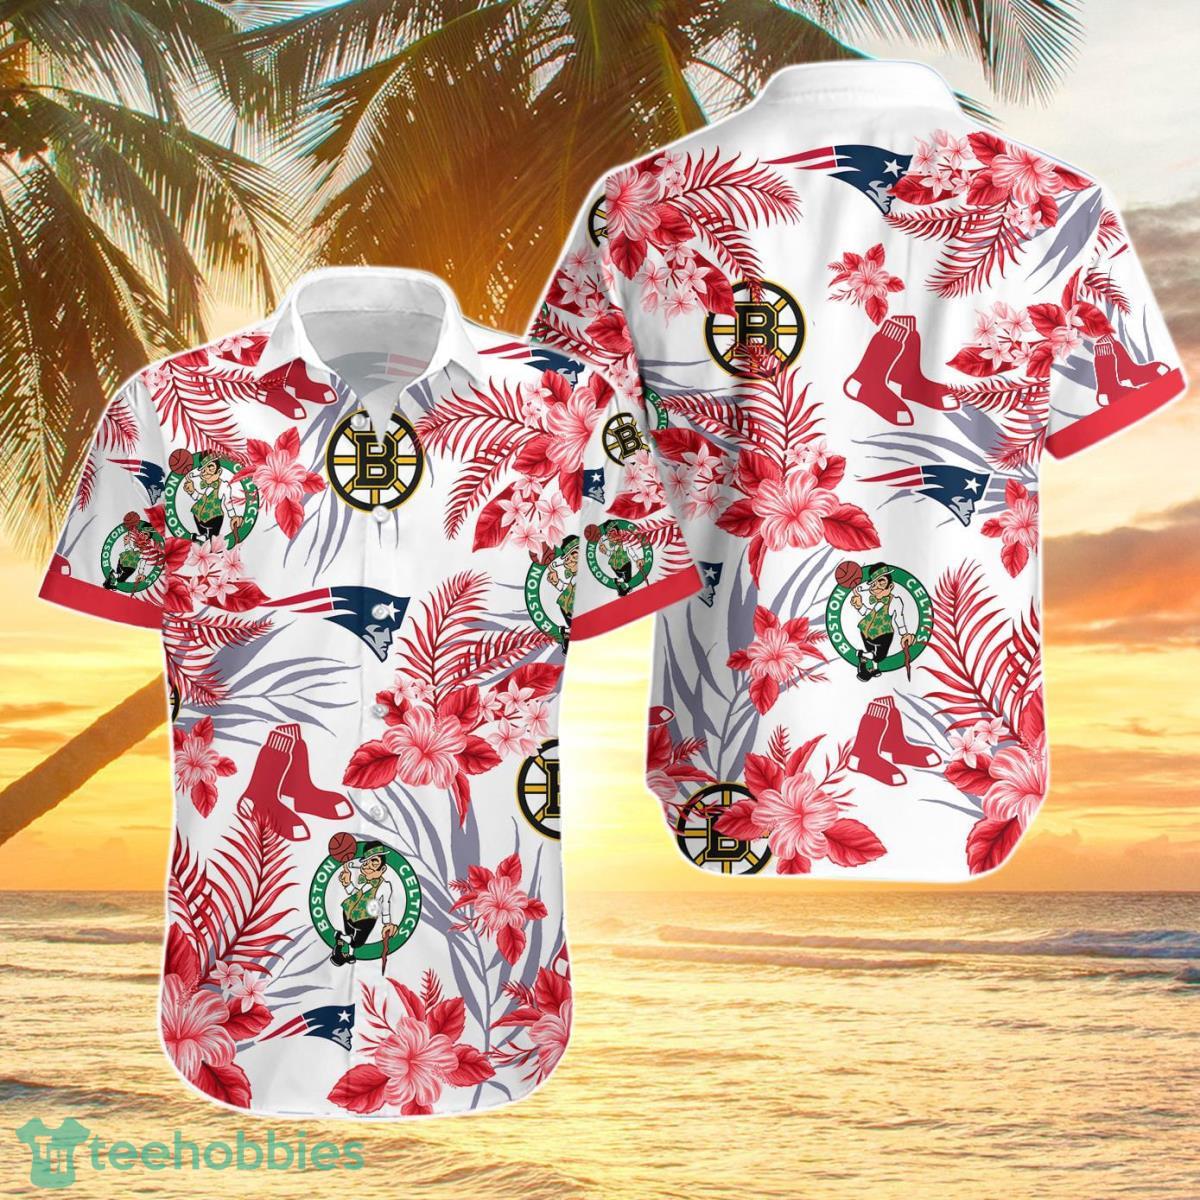 Boston Red Sox Fans Hawaiian Shirt For Fans